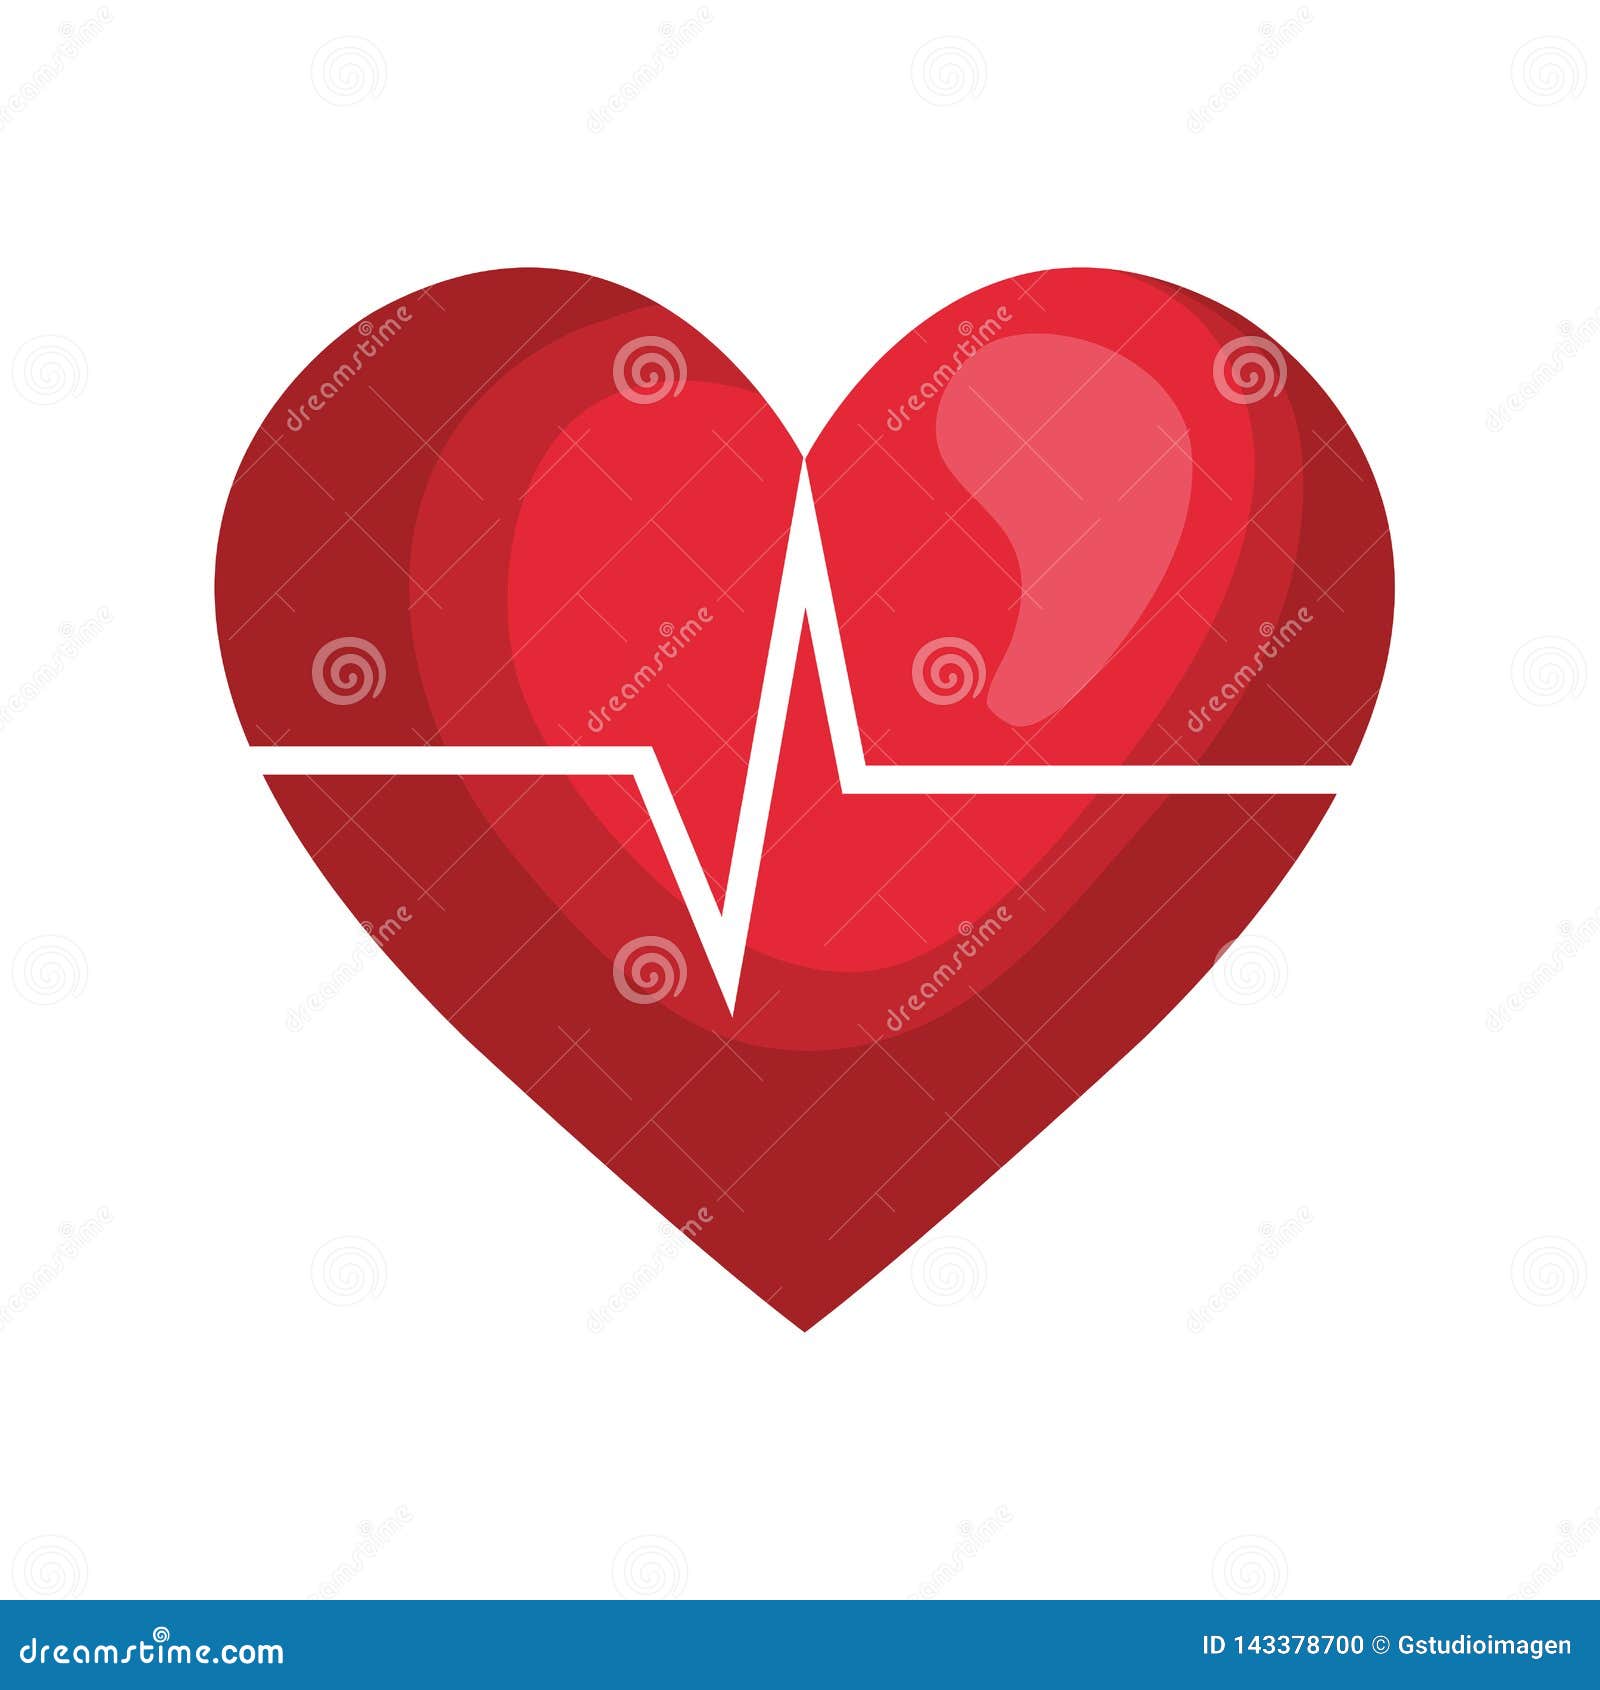 heart cardio  icon